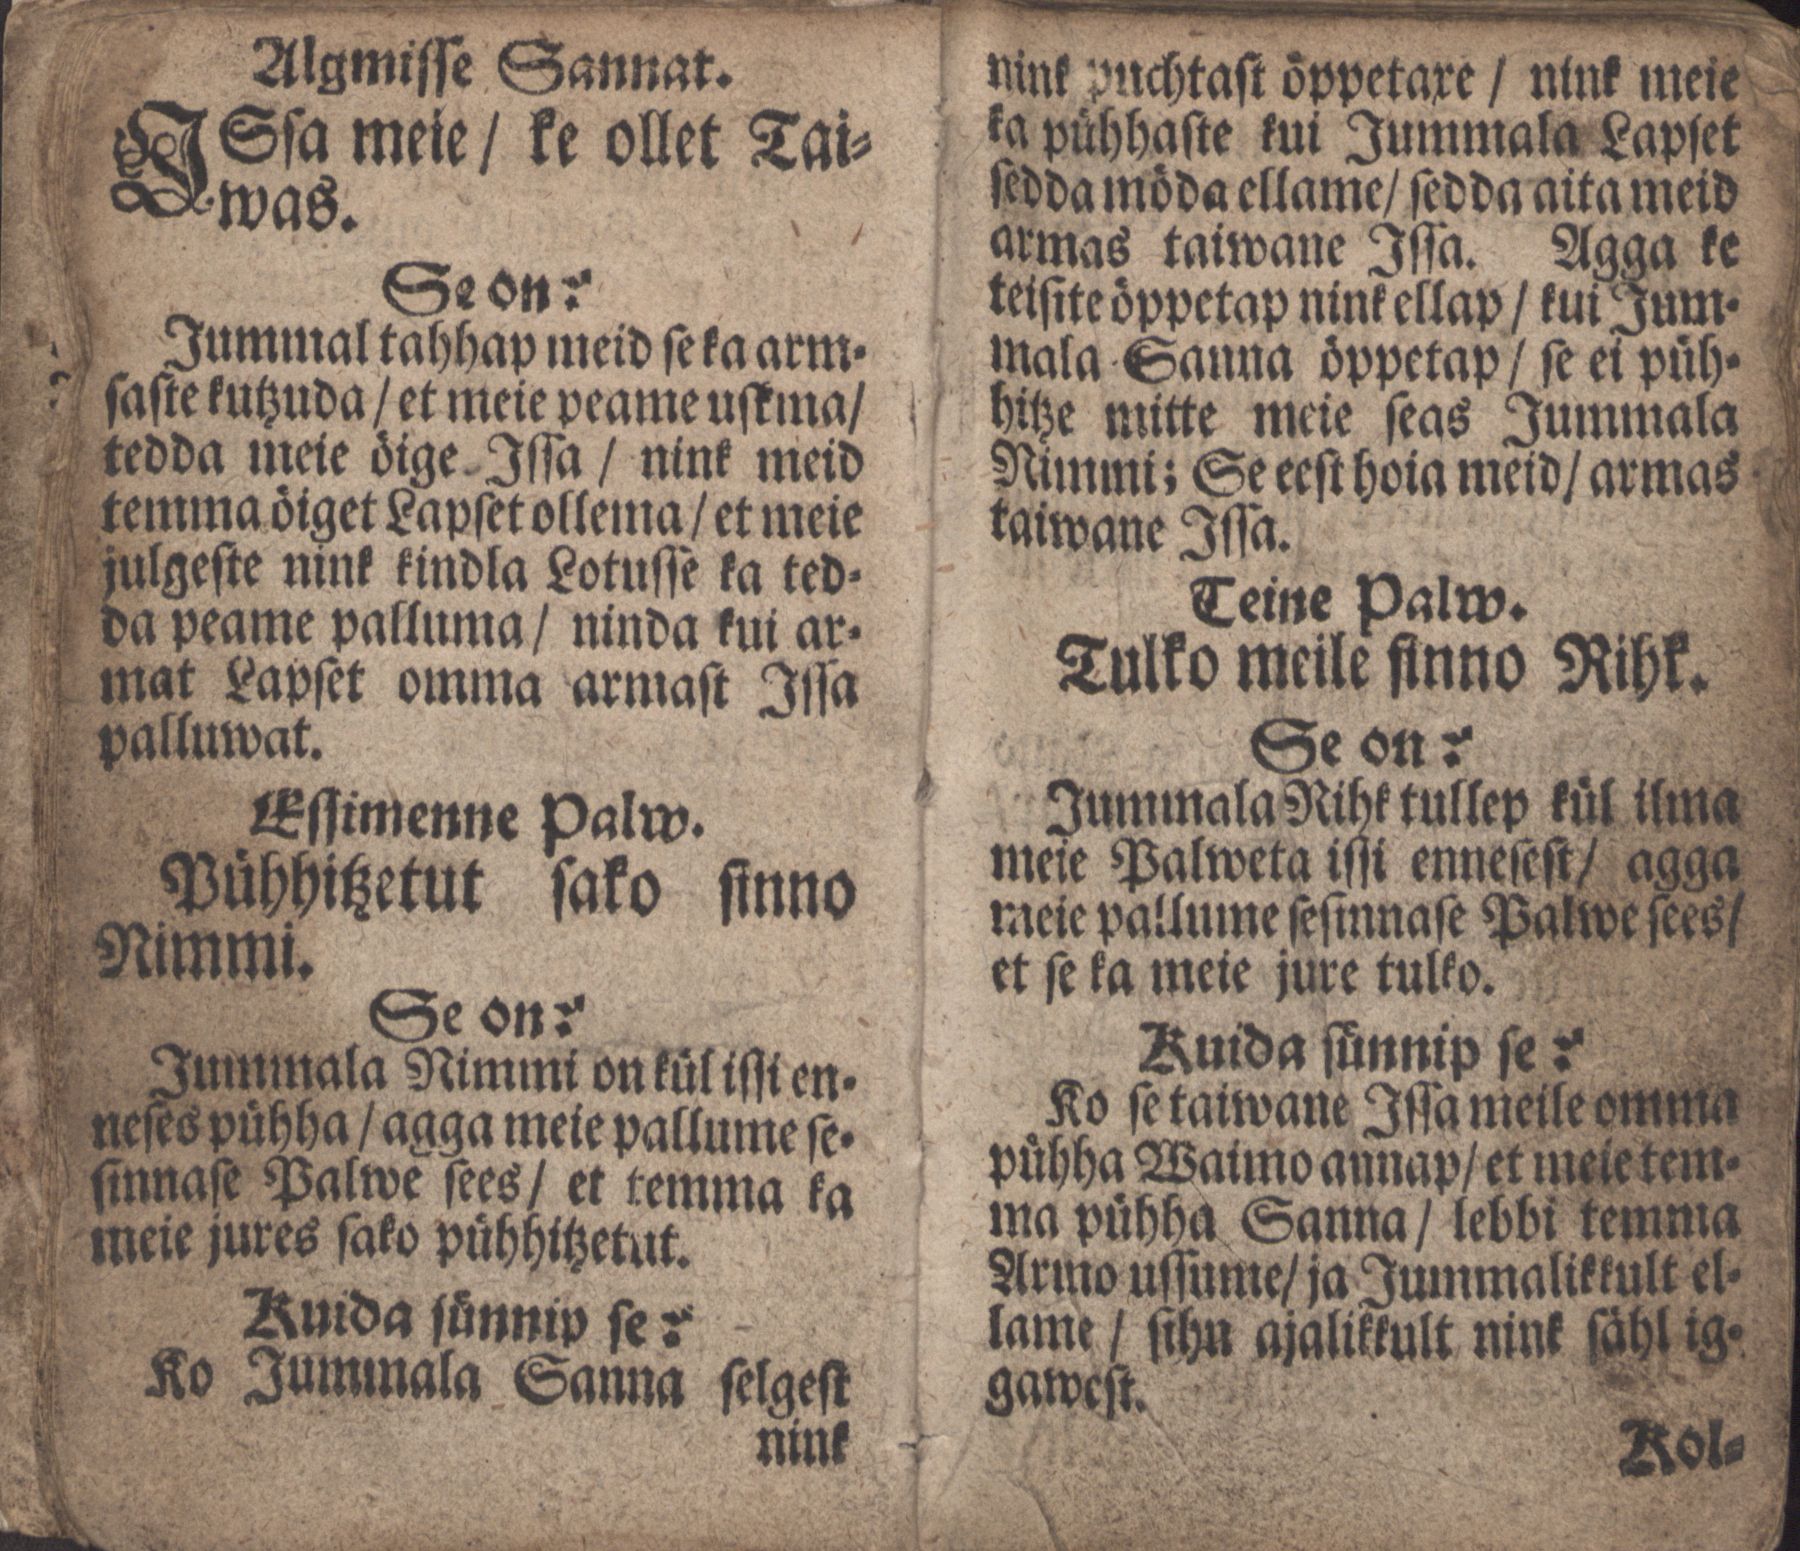 Ma Kele Koddo- nink Kirko-Ramat (1700) | 12. Main body of text